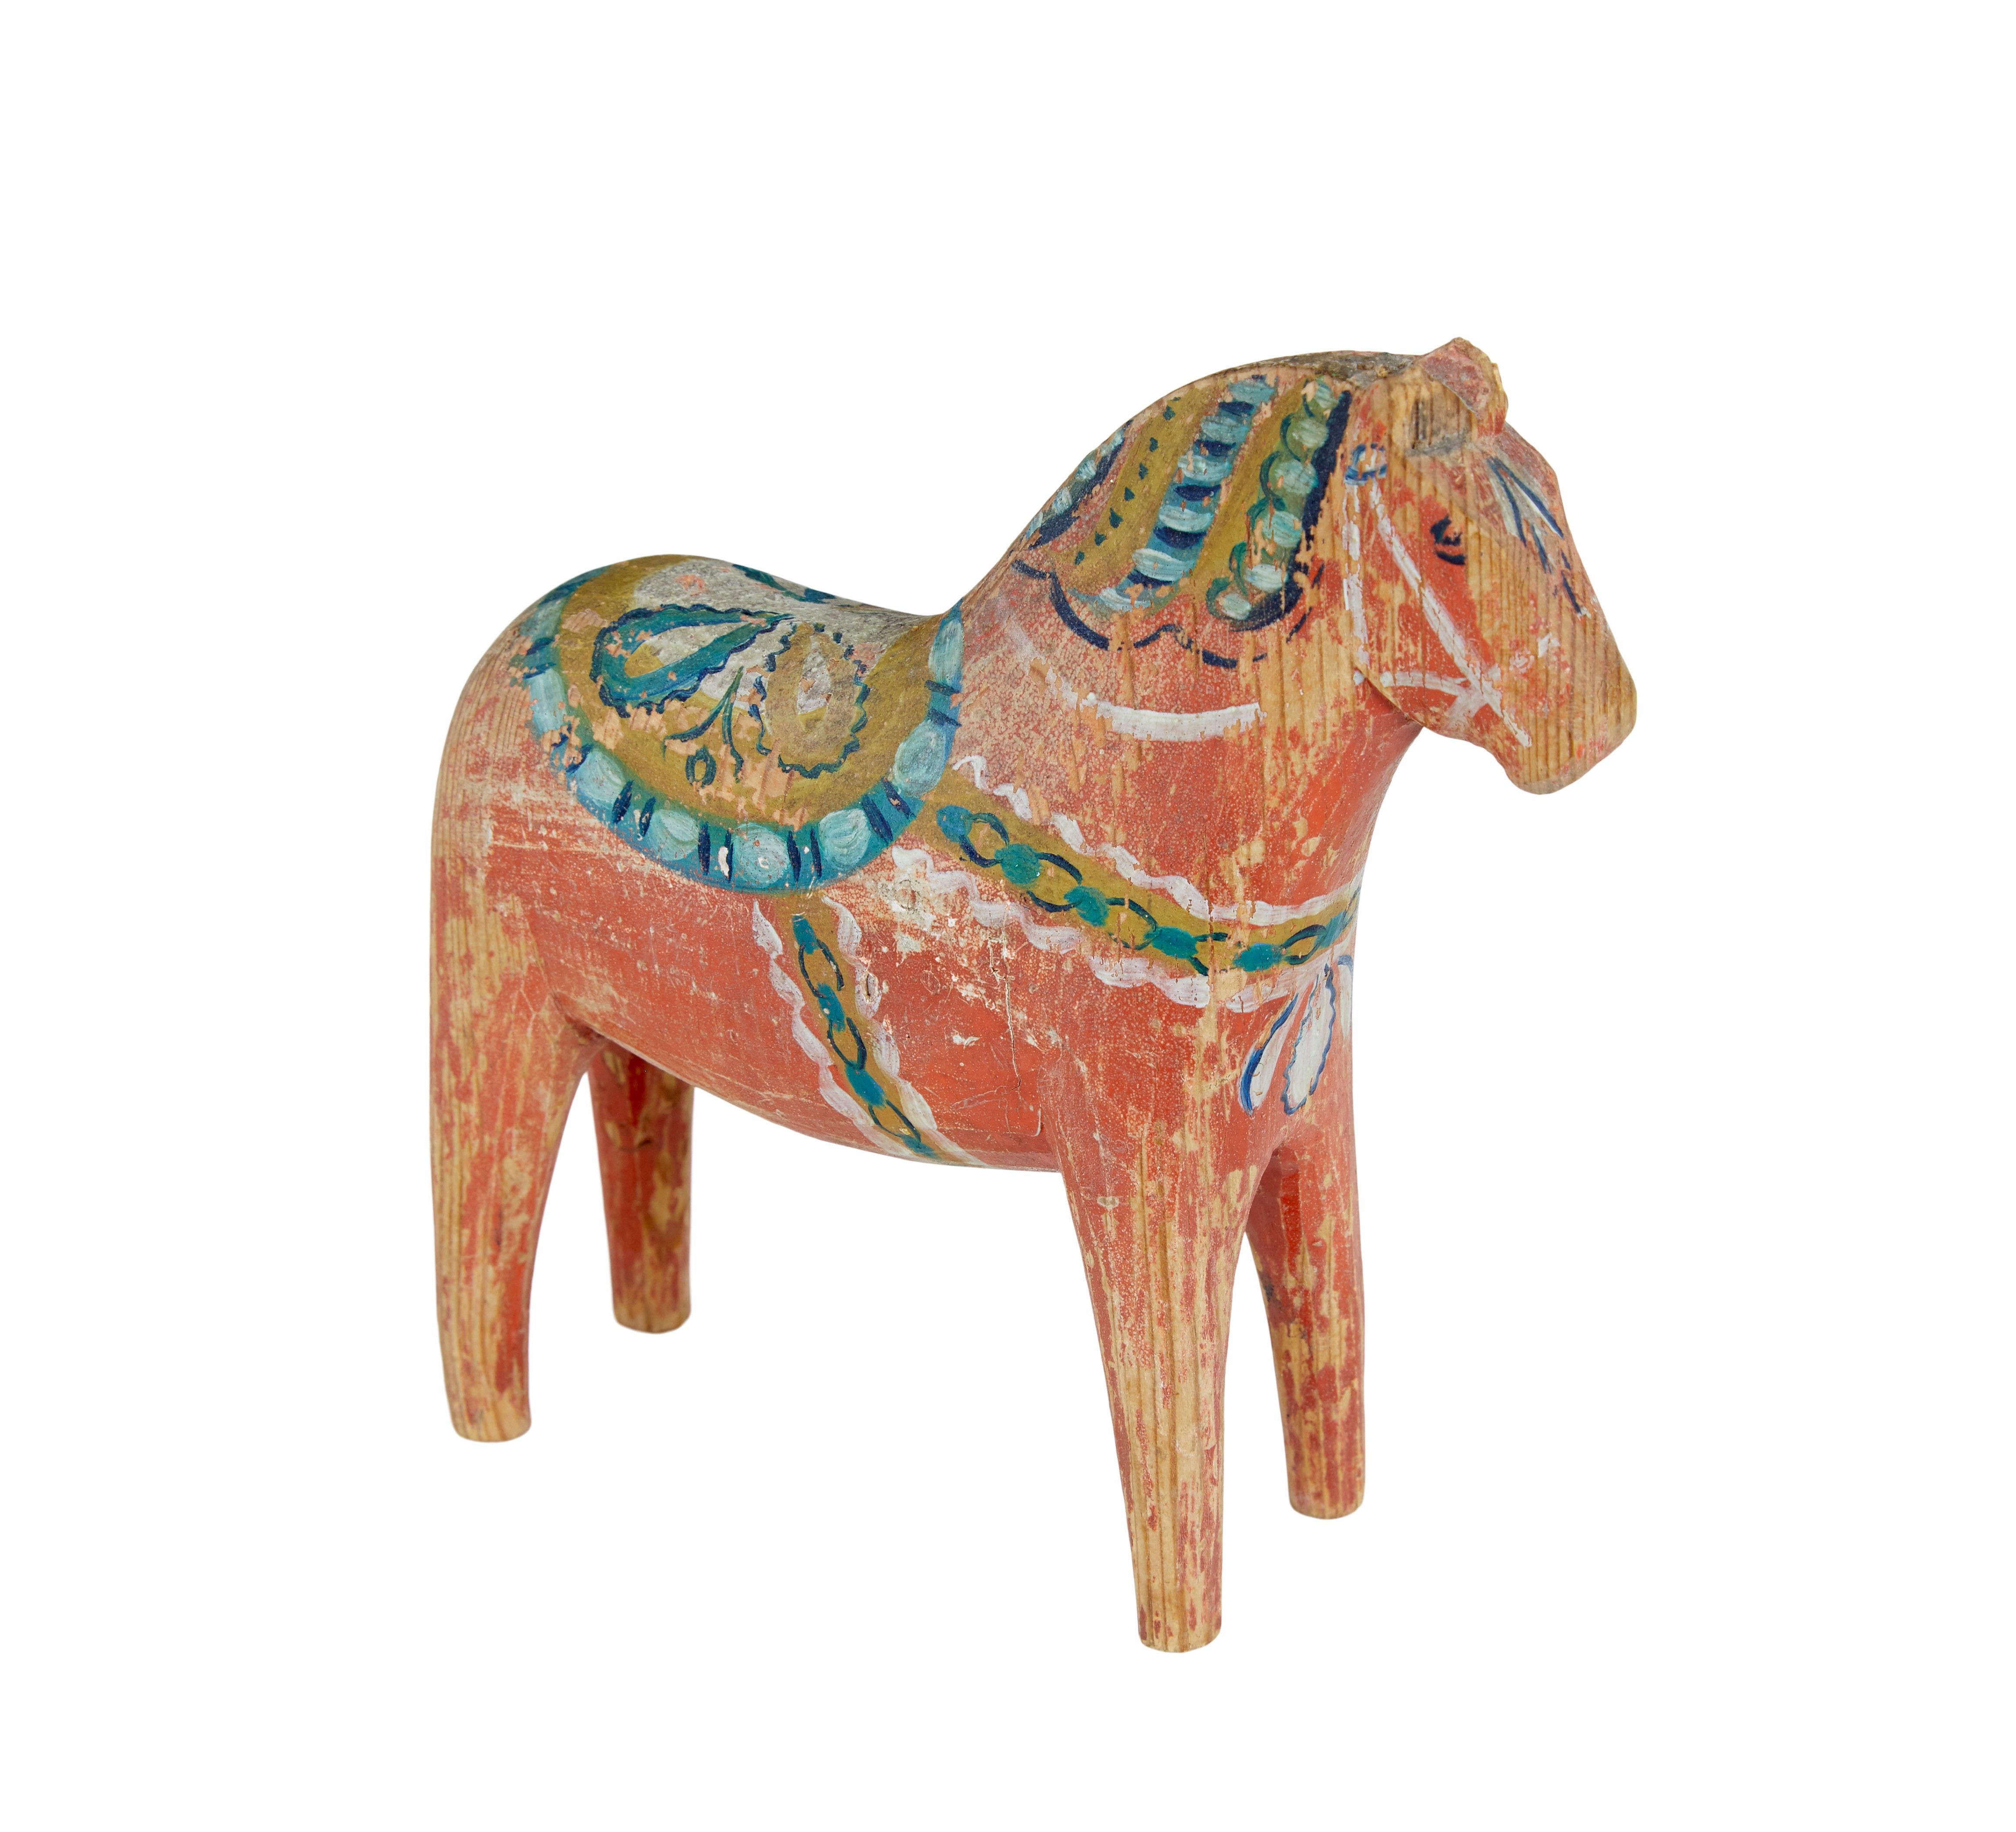 Folk Art 19th century hand painted Swedish Dala horse